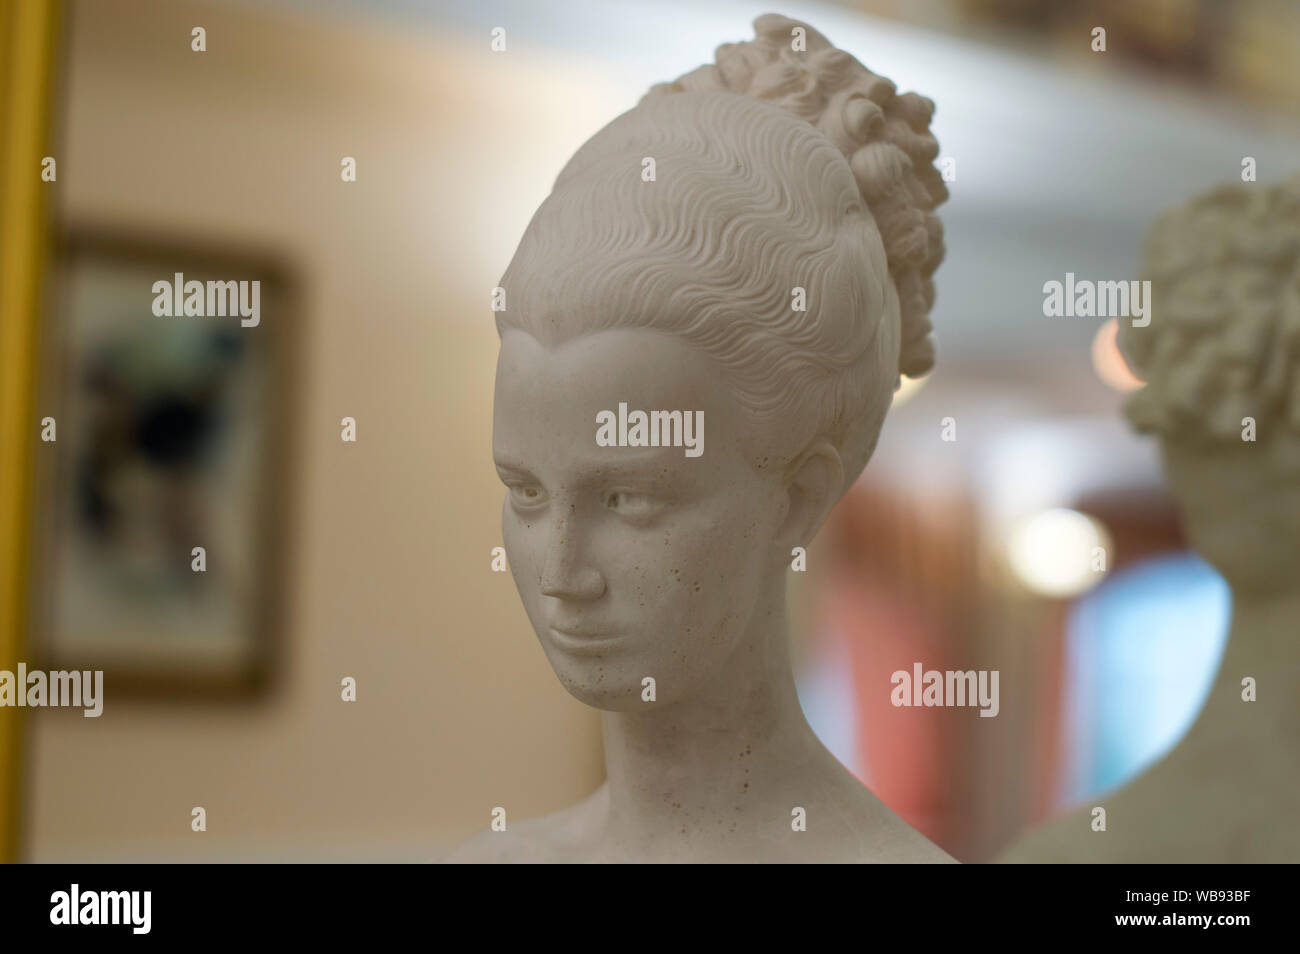 NIZHNY NOVGOROD, RUSSIA October 30, 2016:  The head of a young girl, made of gypsum, on a shelf, near the mirror. Stock Photo